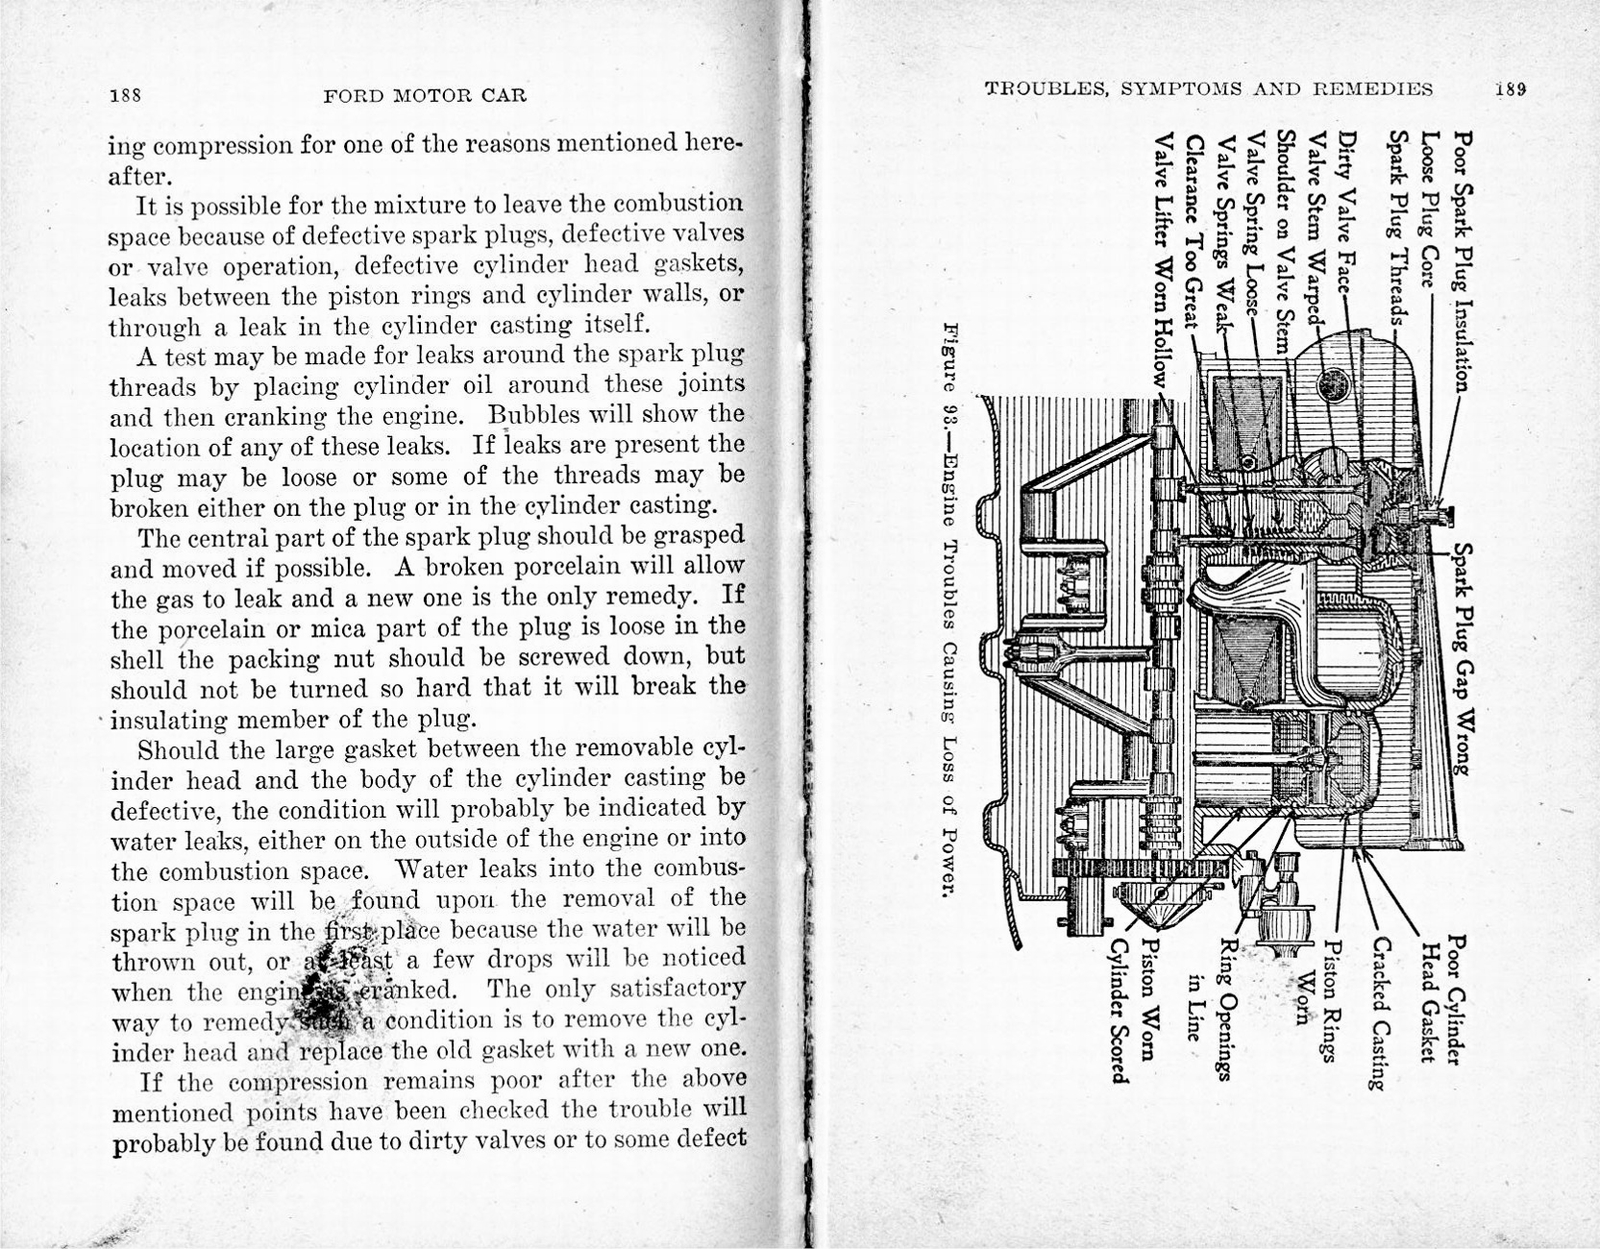 n_1917 Ford Car & Truck Manual-188-189.jpg